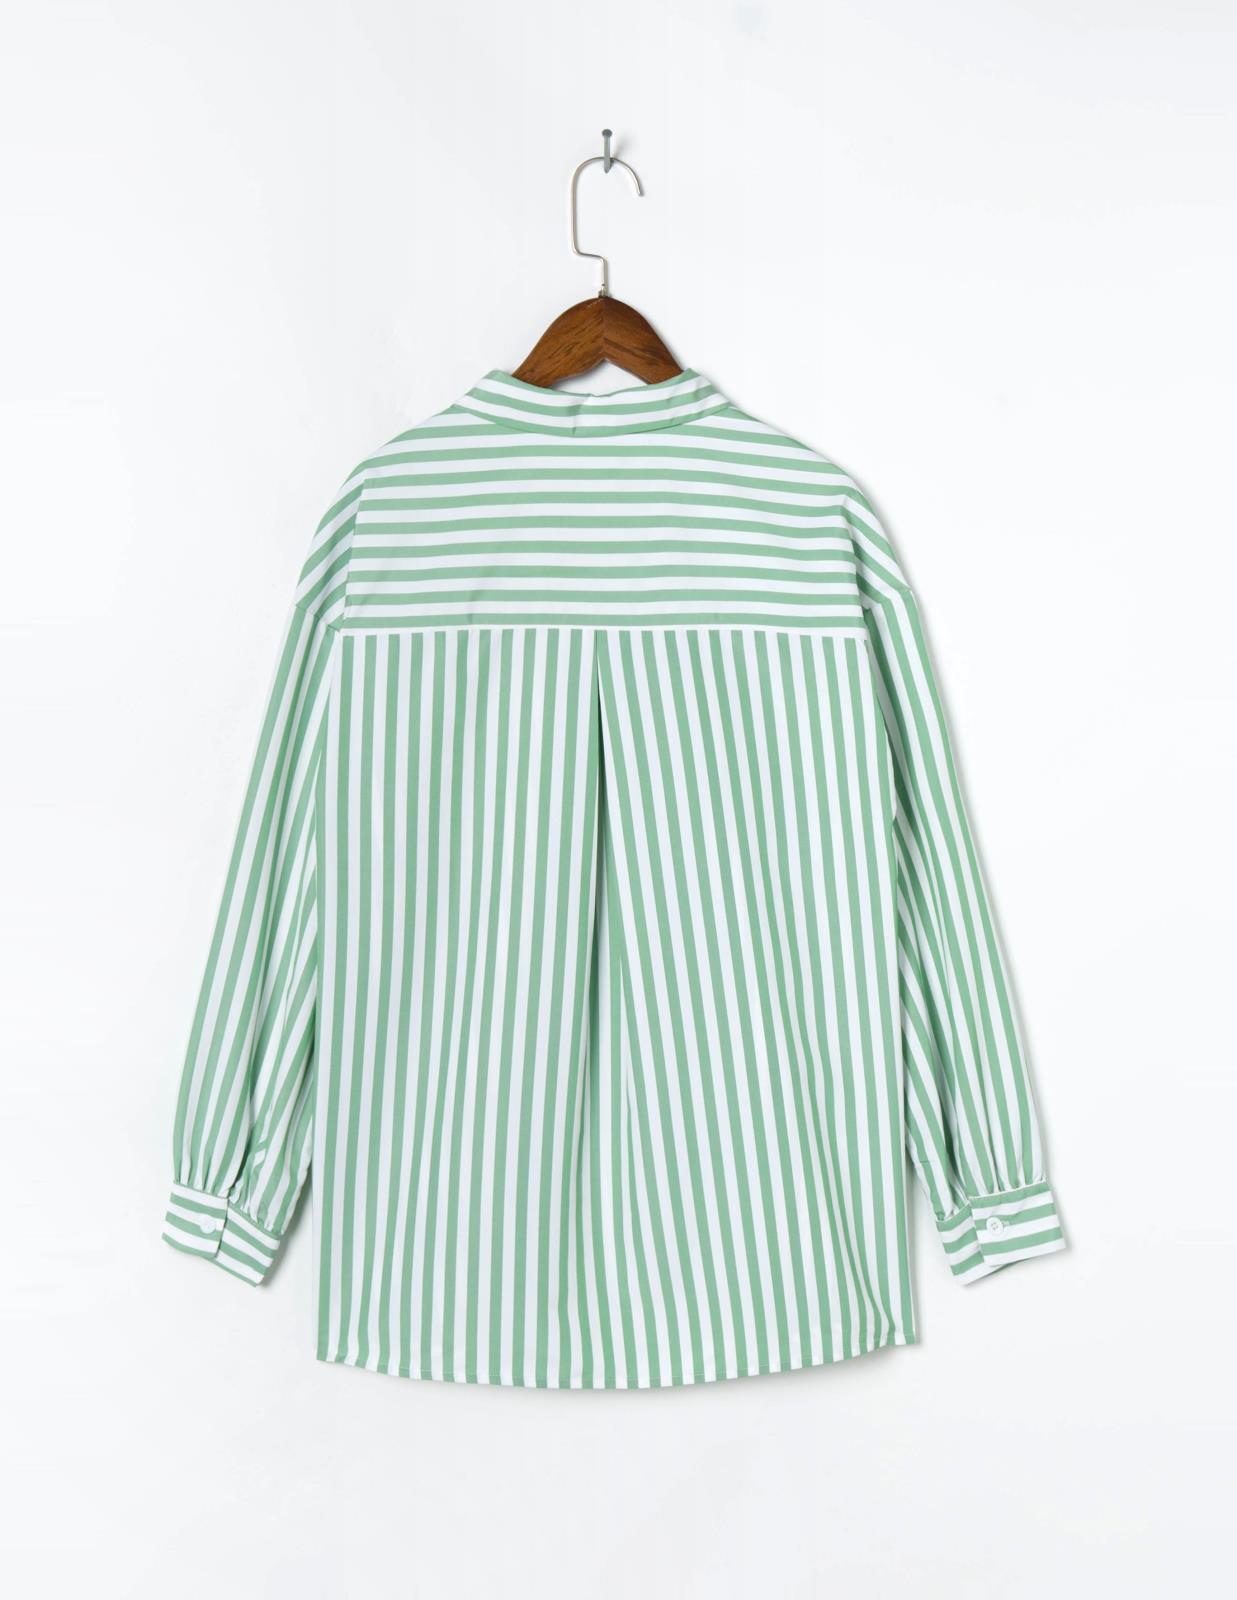 BTS Jungkook Inspired Green Striped Loose Long-Sleeved